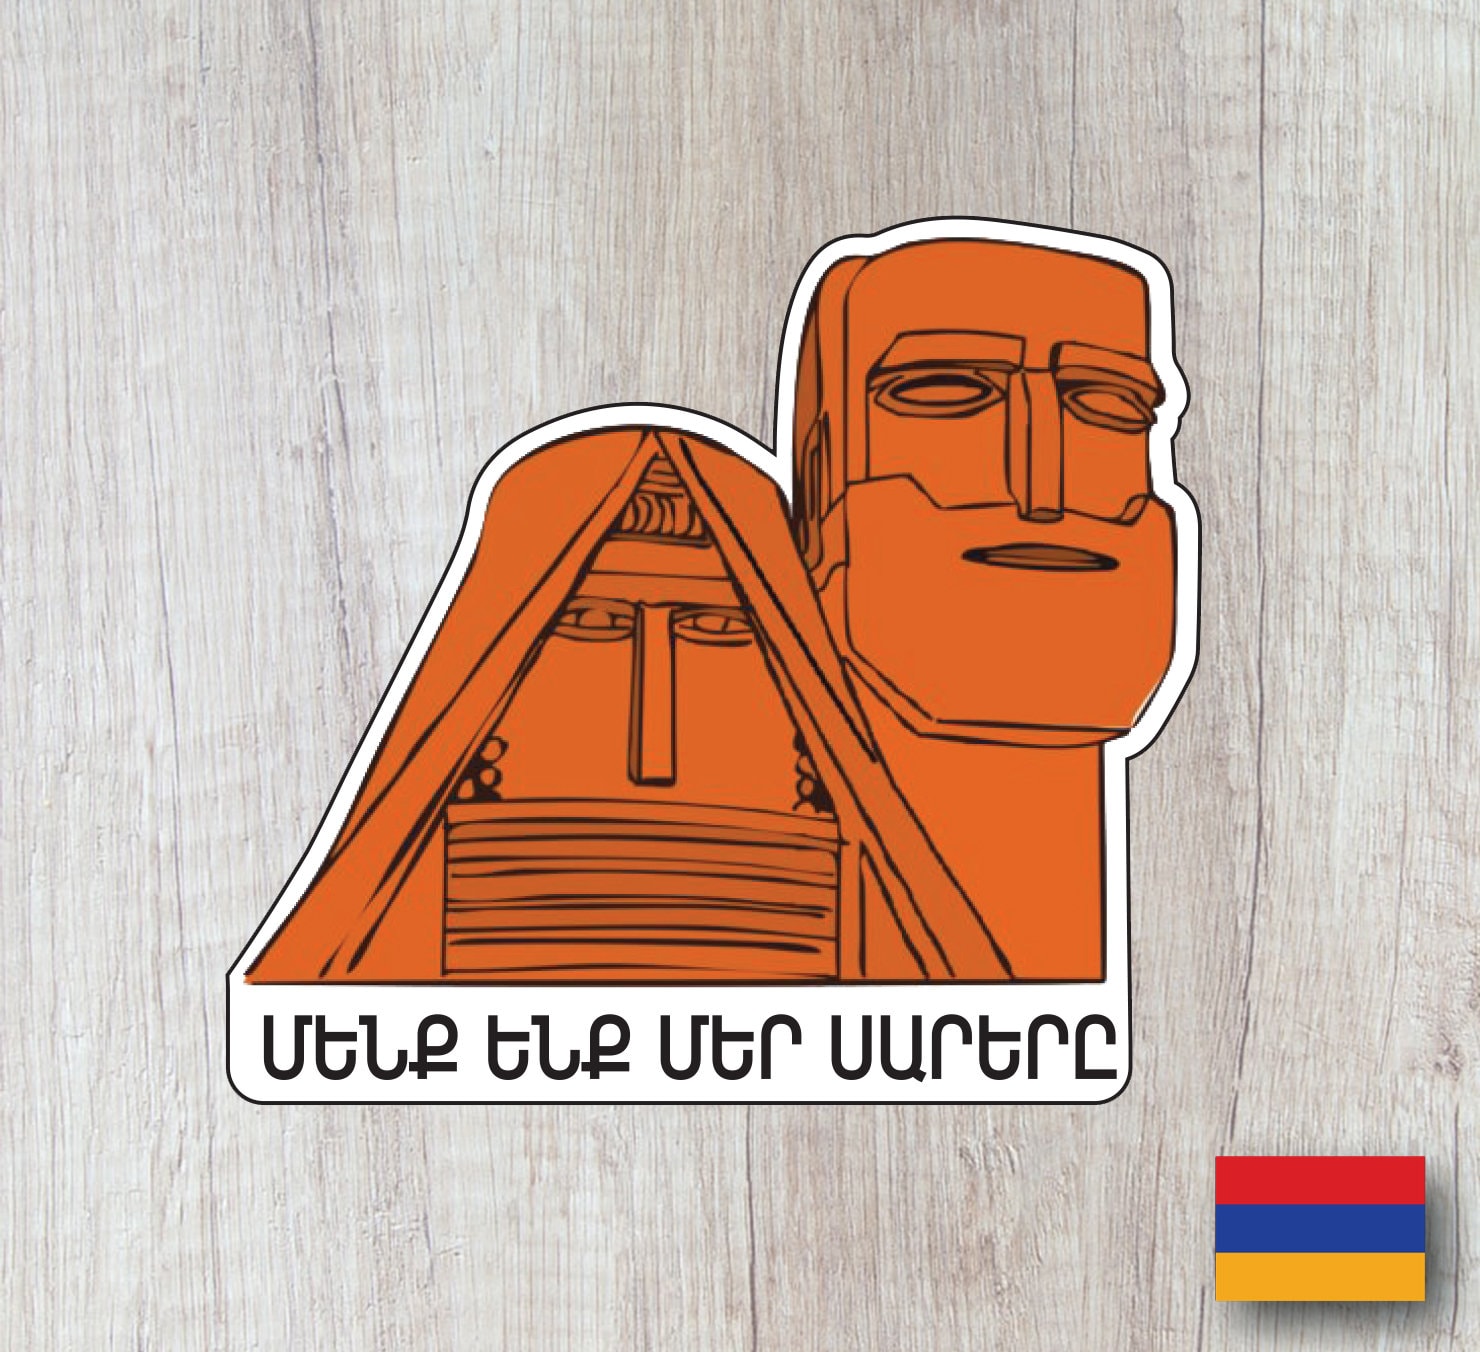 Drawing Stencils & Haykakan Kaghaparik - Gifts - : Armenian  books, music, videos, posters, greeting cards, and gift items